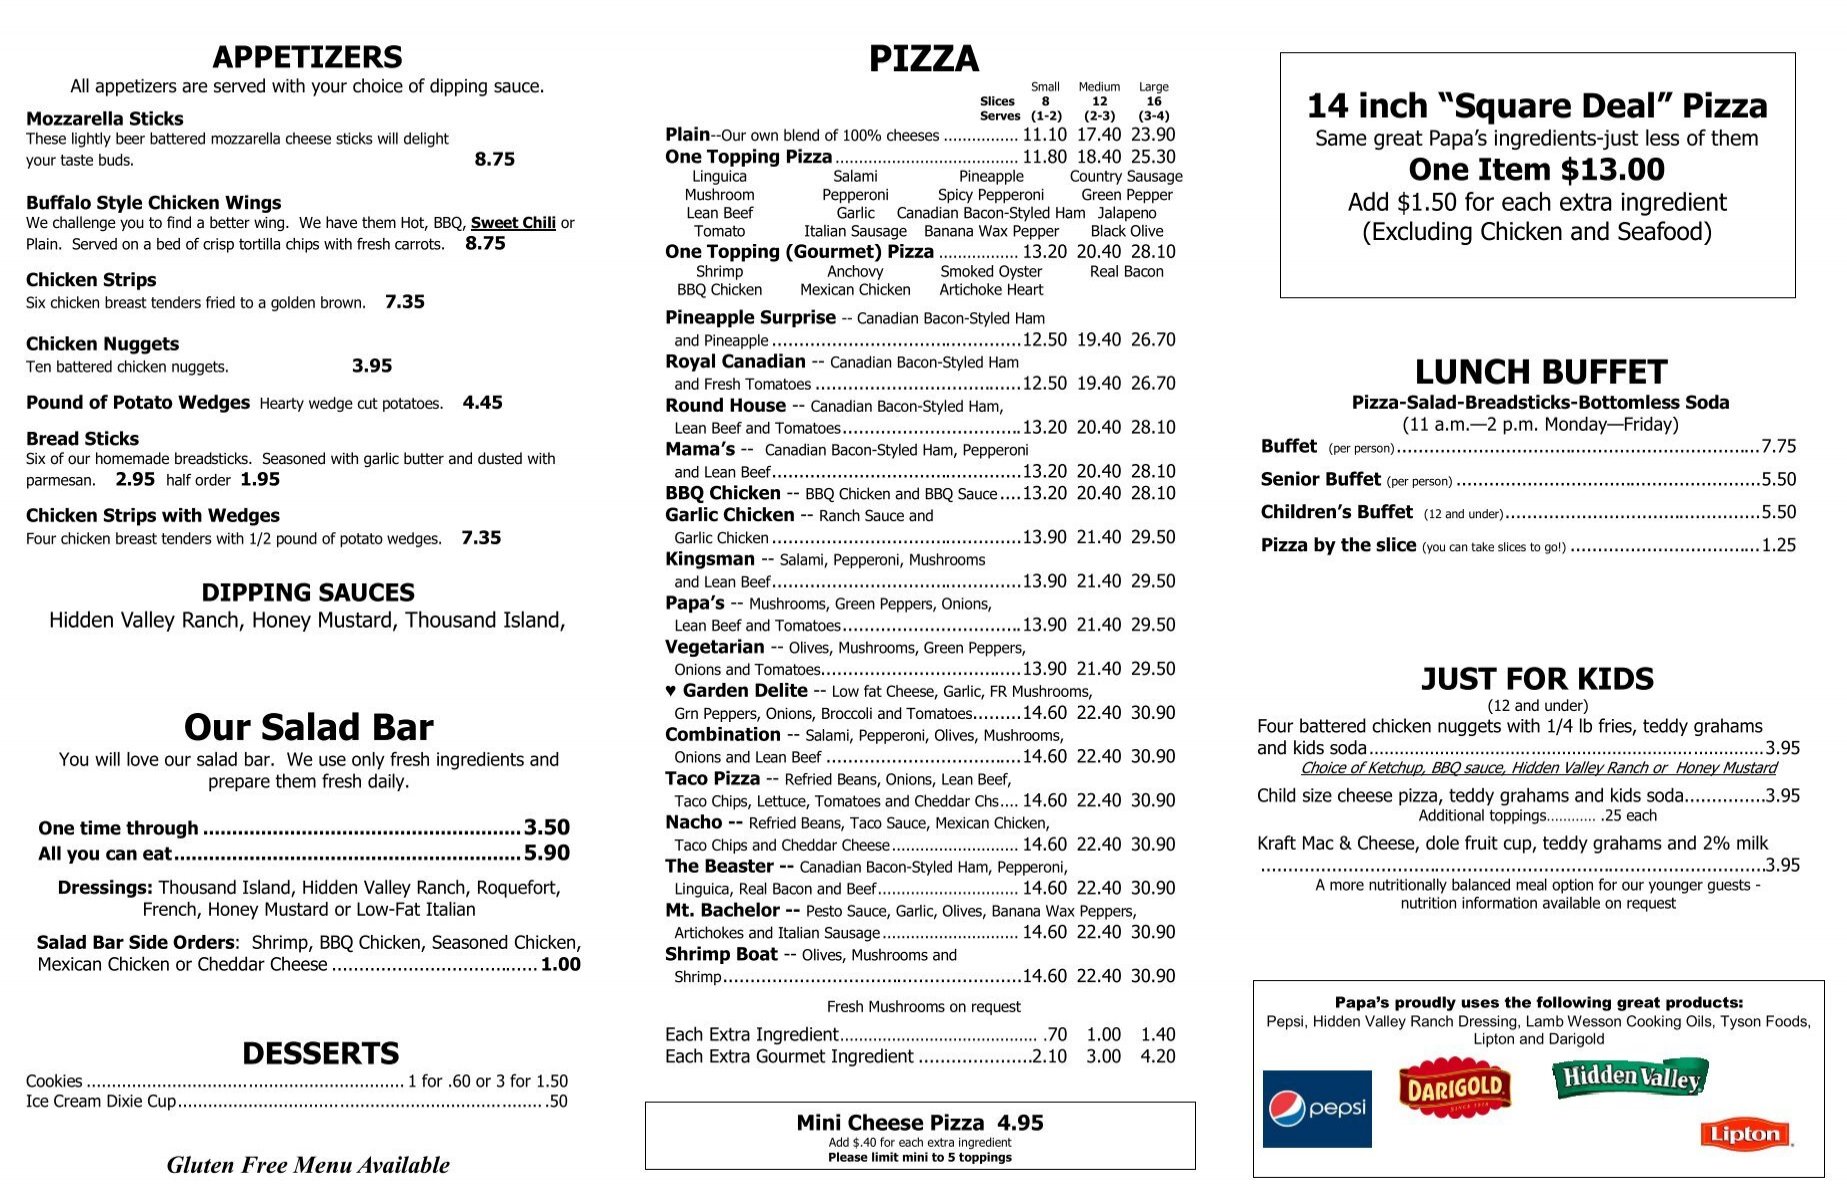 PAPA'S PIZZA PARLOR, Springfield - 4011 Main St - Menu, Prices & Restaurant  Reviews - Tripadvisor